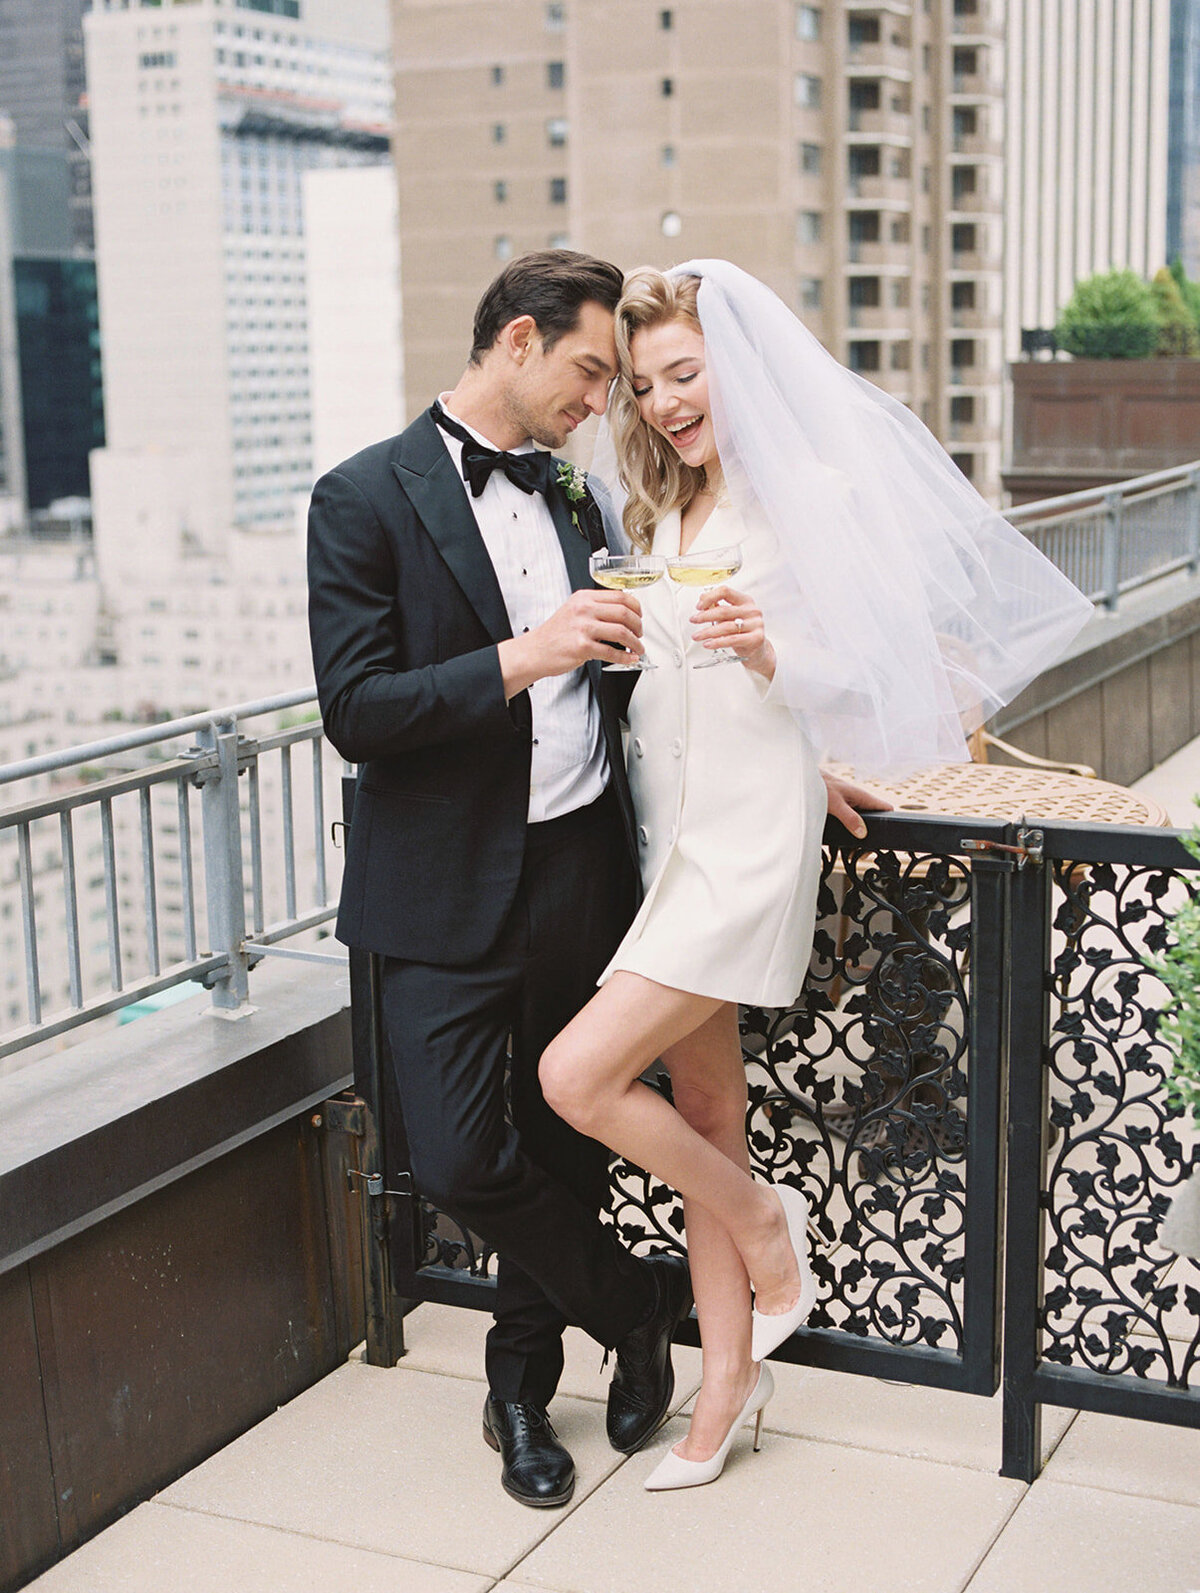 The Plaza Hotel - New York City - Elopement Wedding - Stephanie Michelle Photography - _stephaniemichellephotog - 37-R1-E014